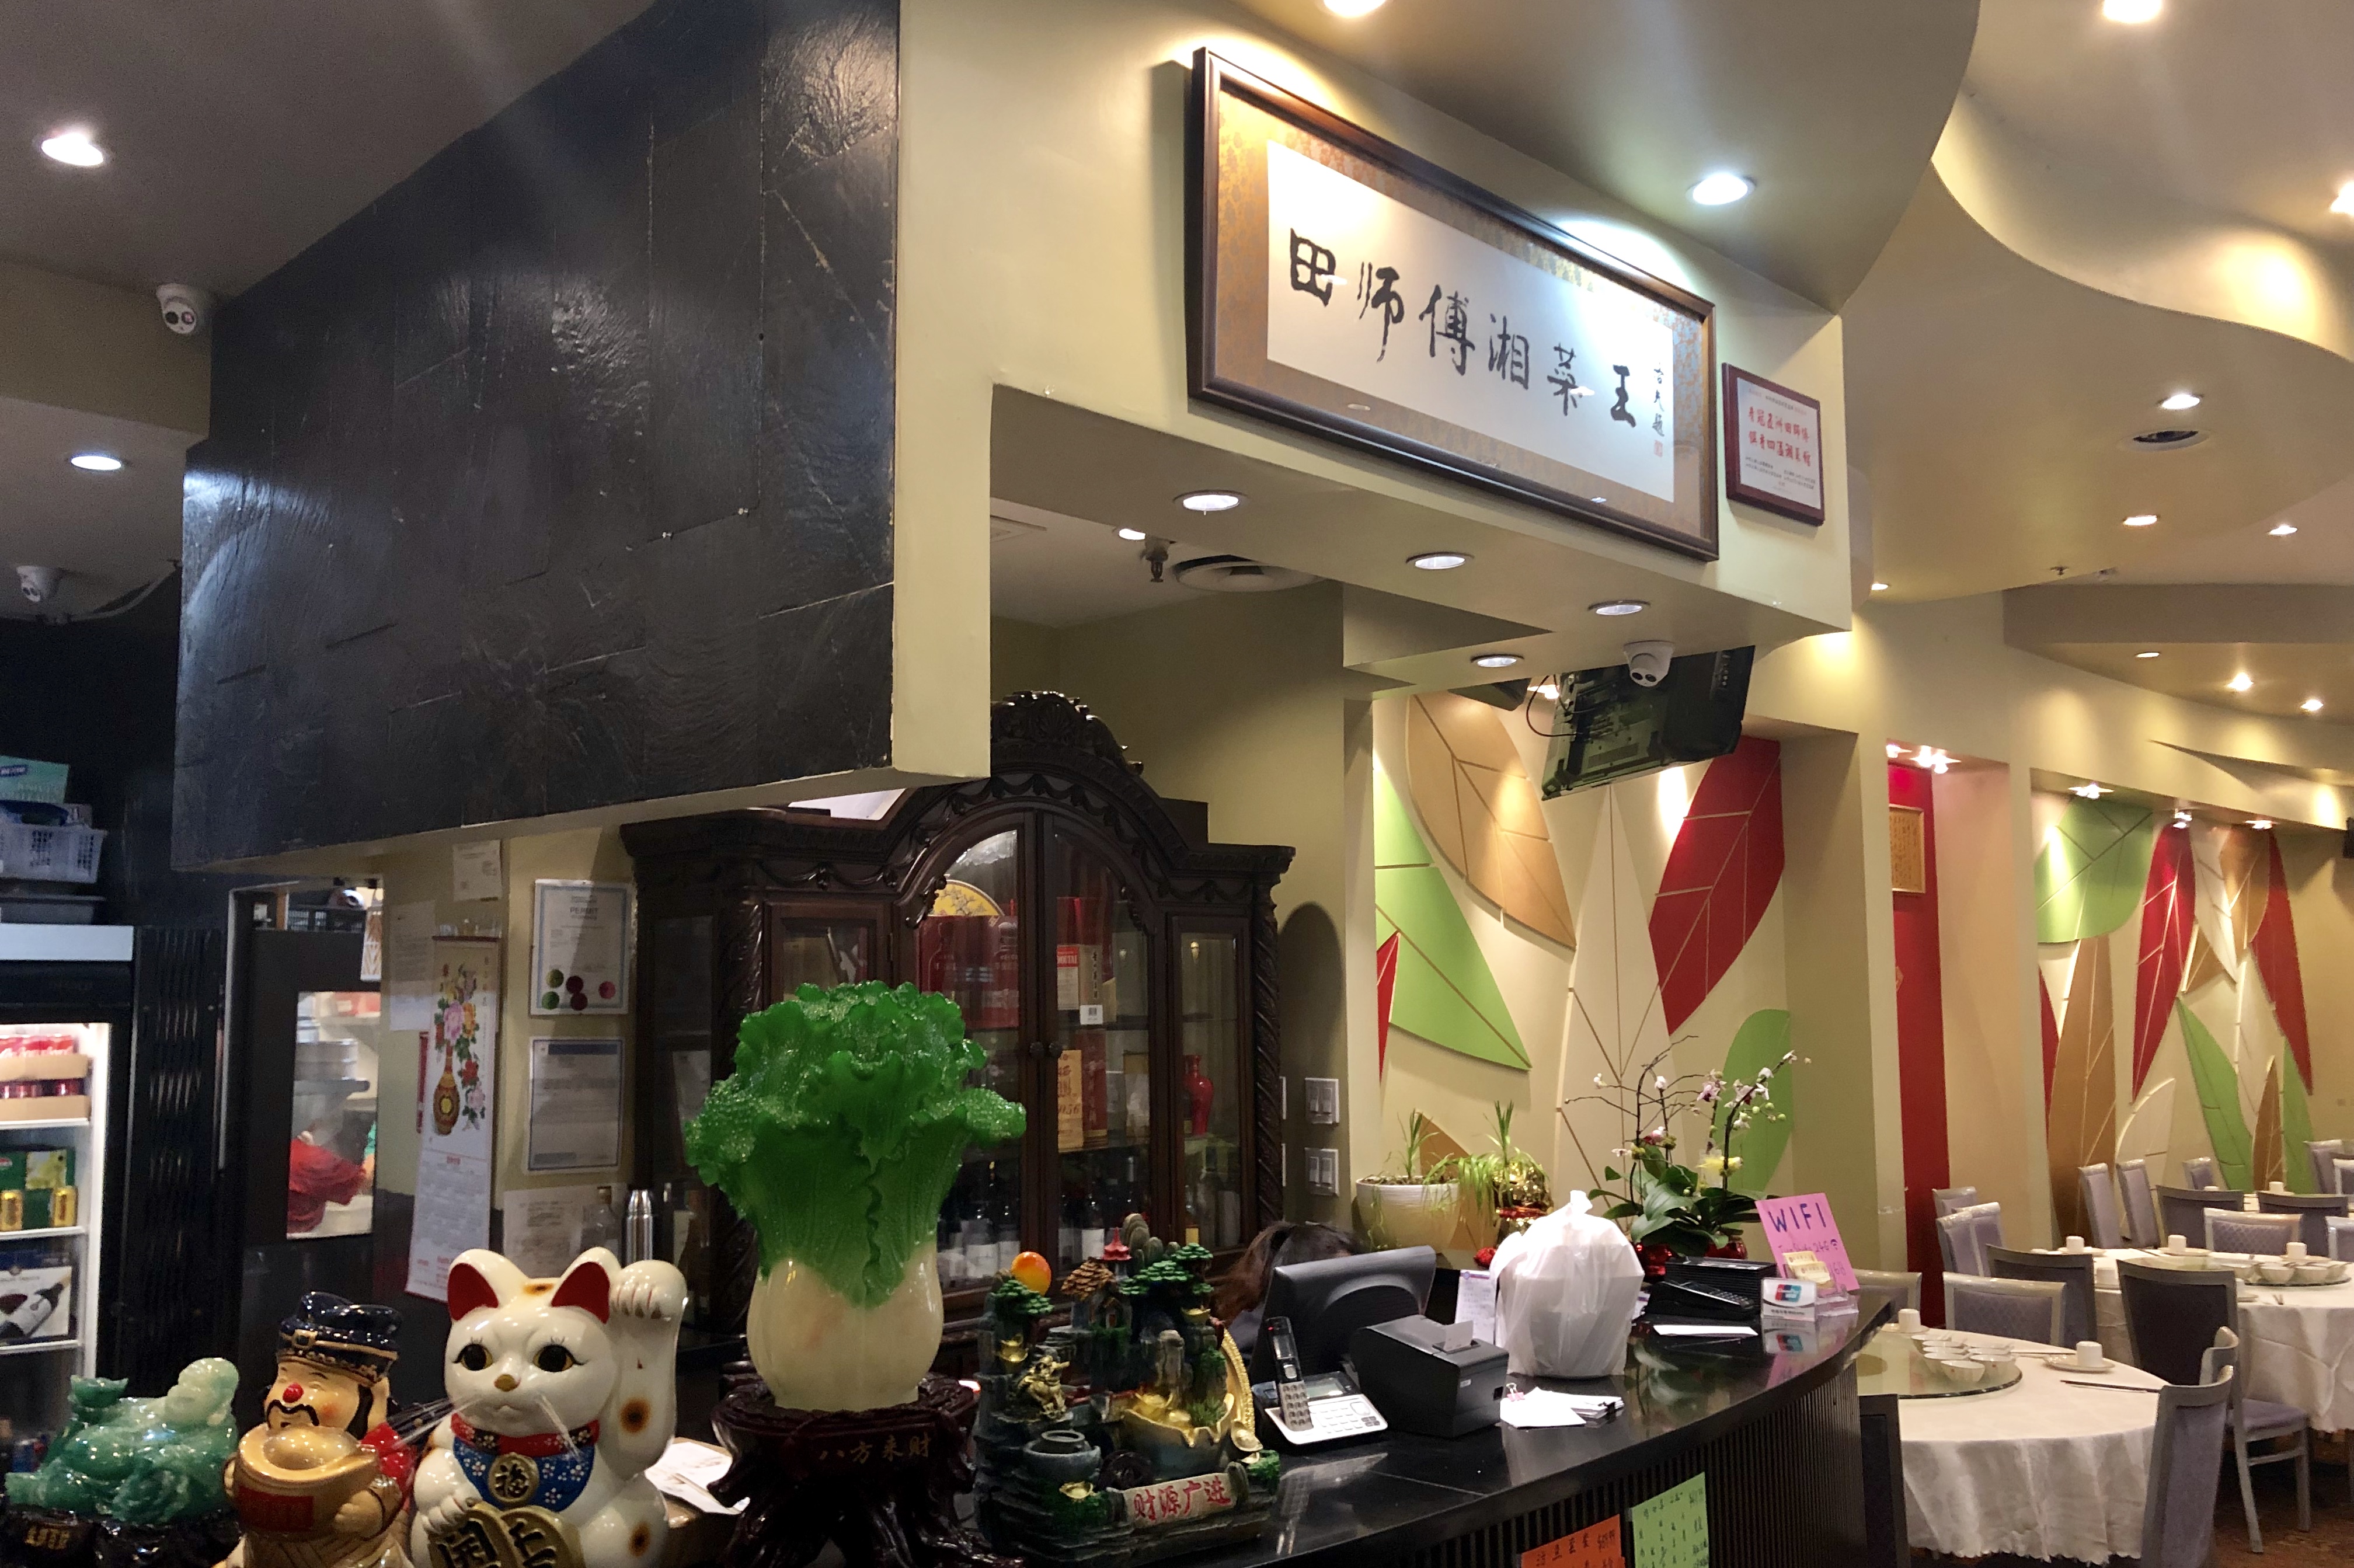 Tian Shi Fu Restaurant on Alexandra Road